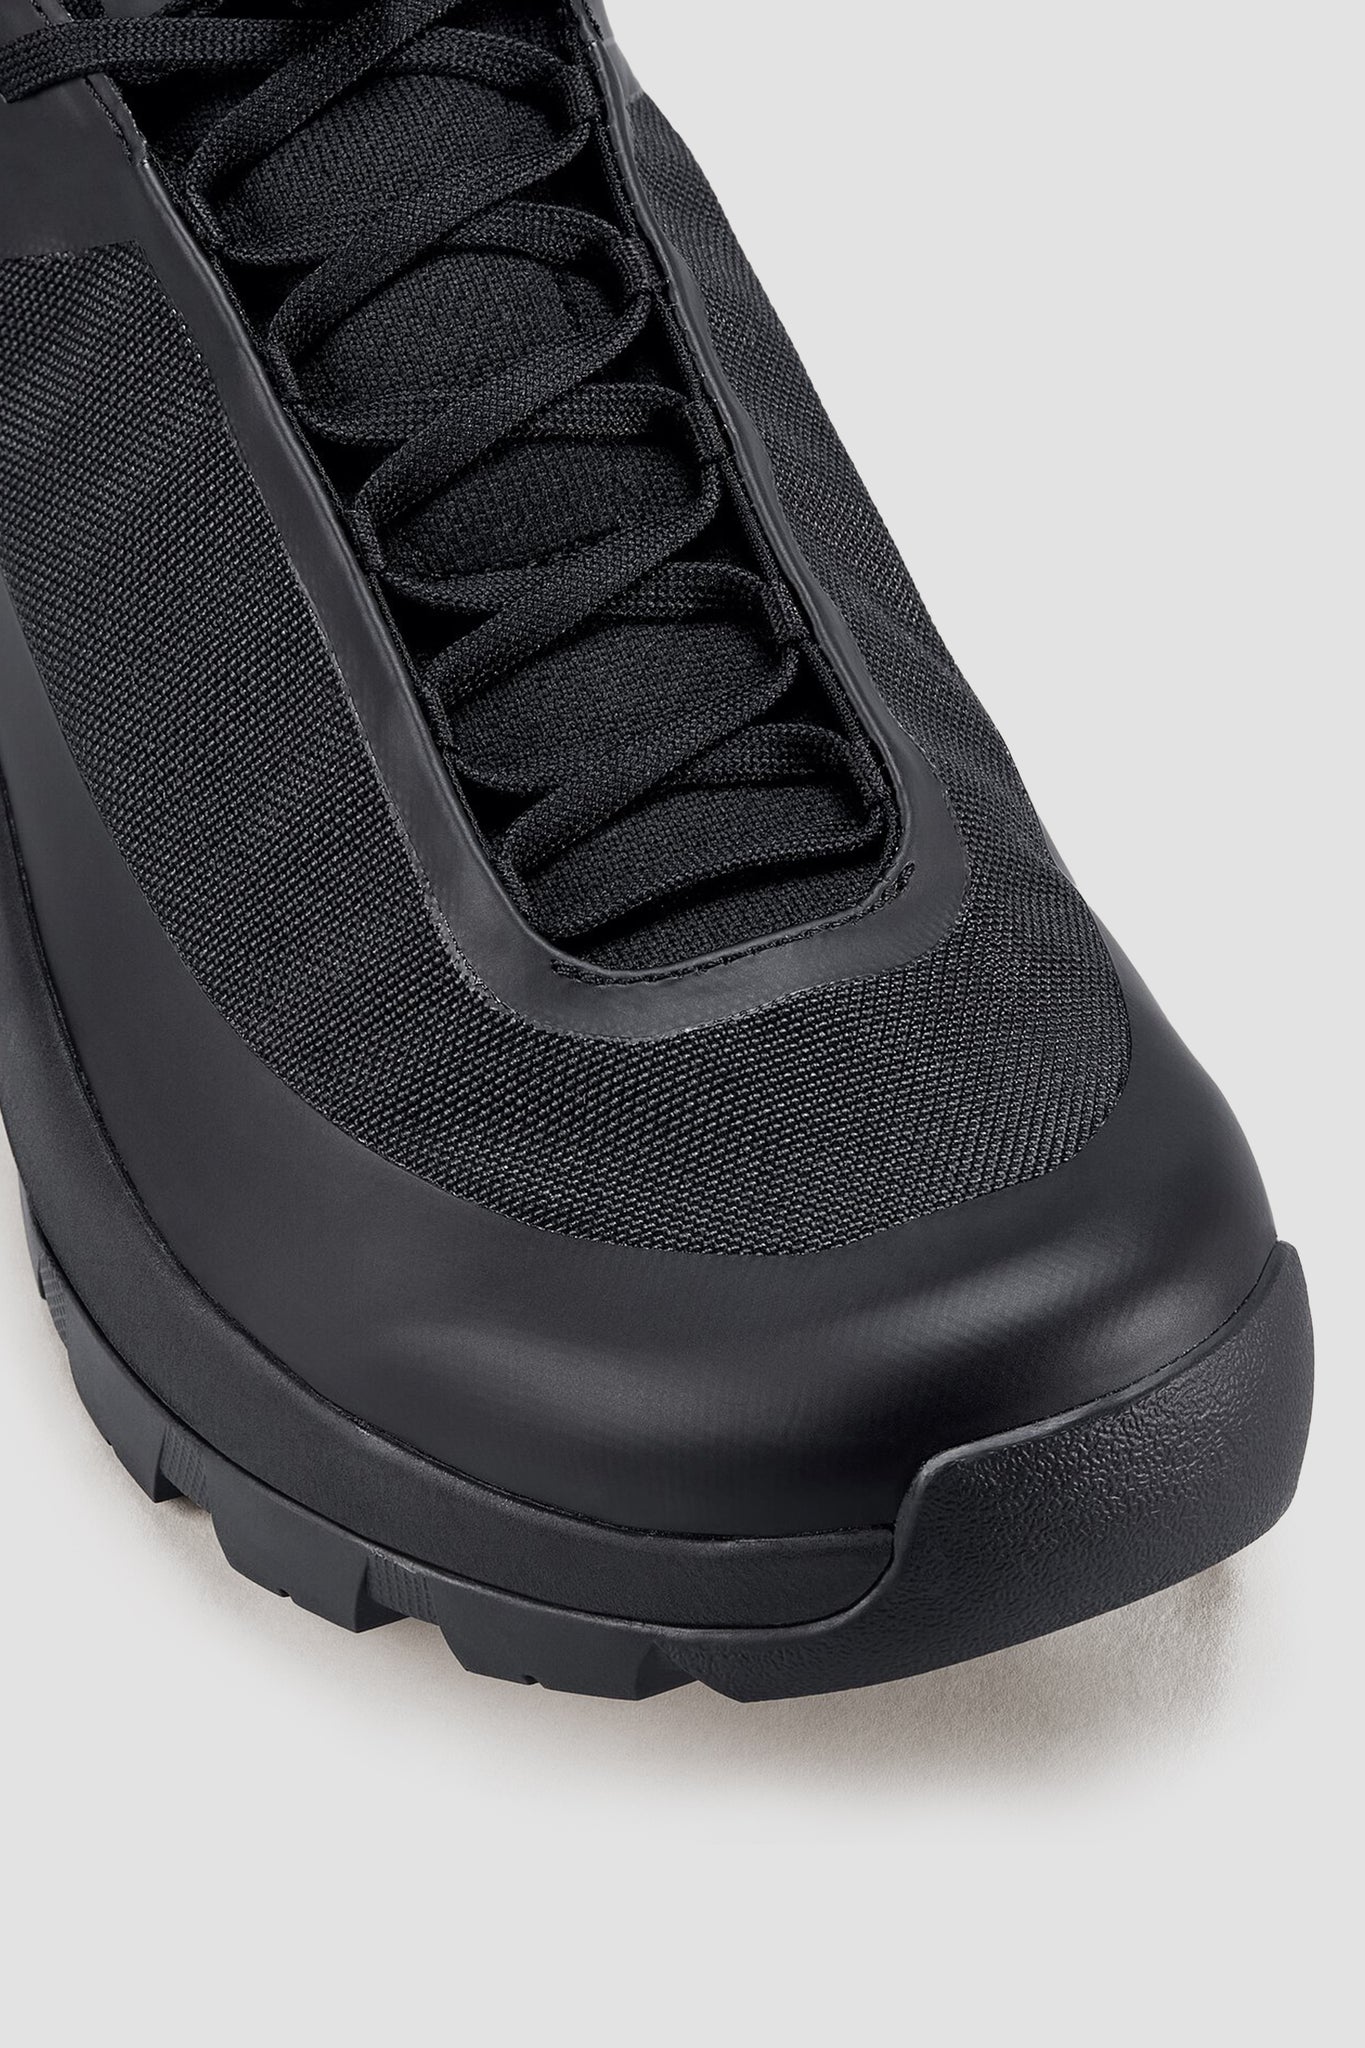 Arc'teryx Men's Vertex Alpine Shoe in Black/Black